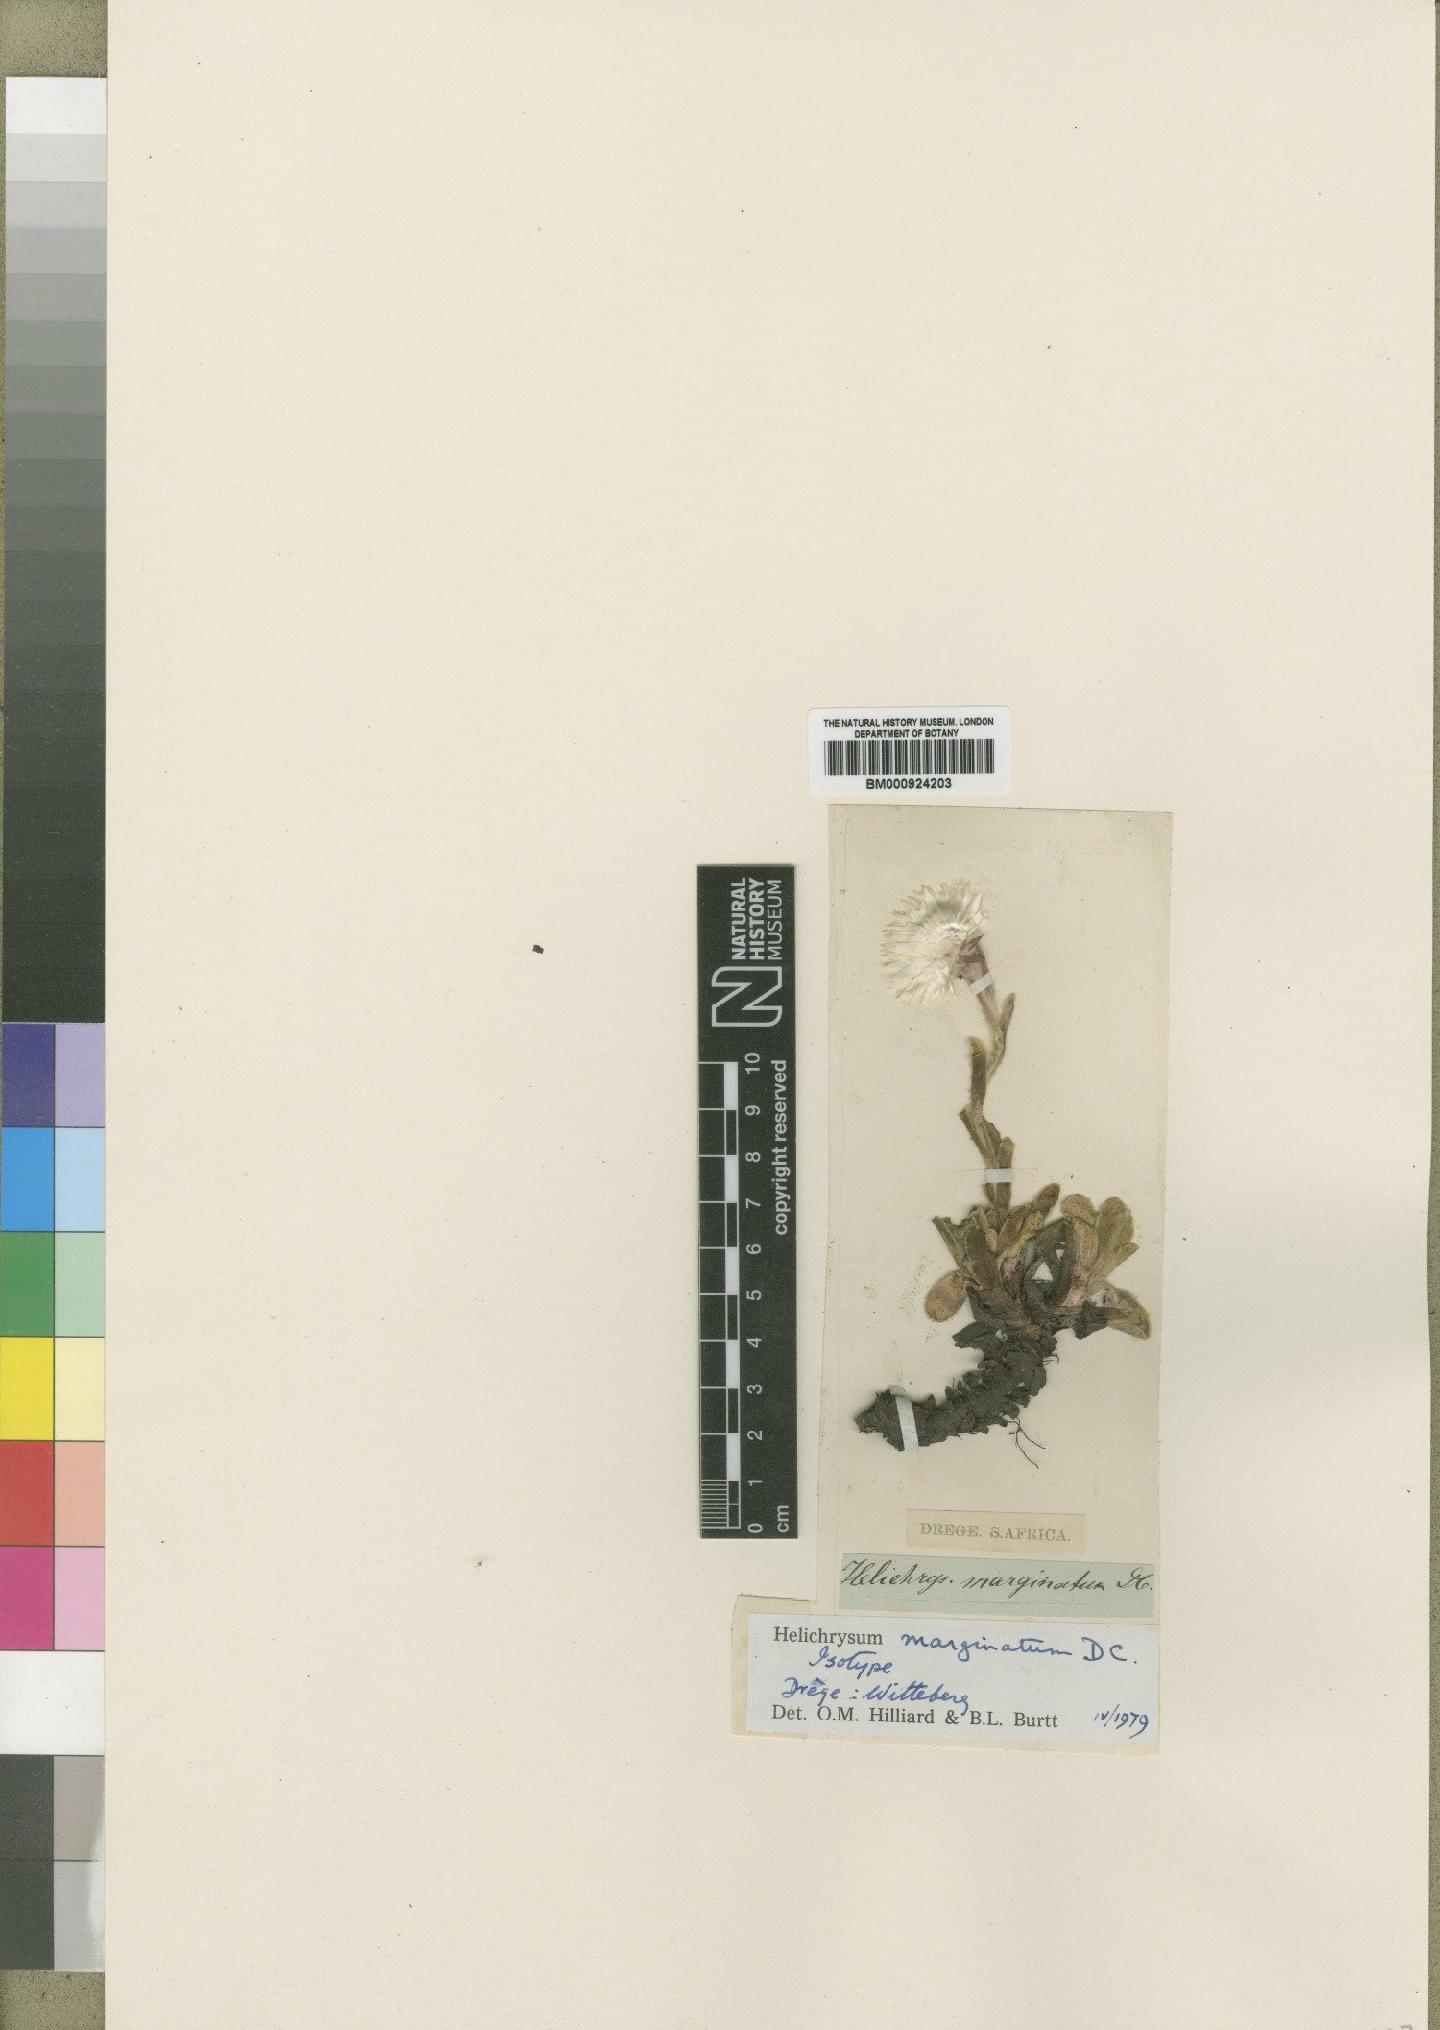 To NHMUK collection (Helichrysum marginatum DC.; Isotype; NHMUK:ecatalogue:4529231)